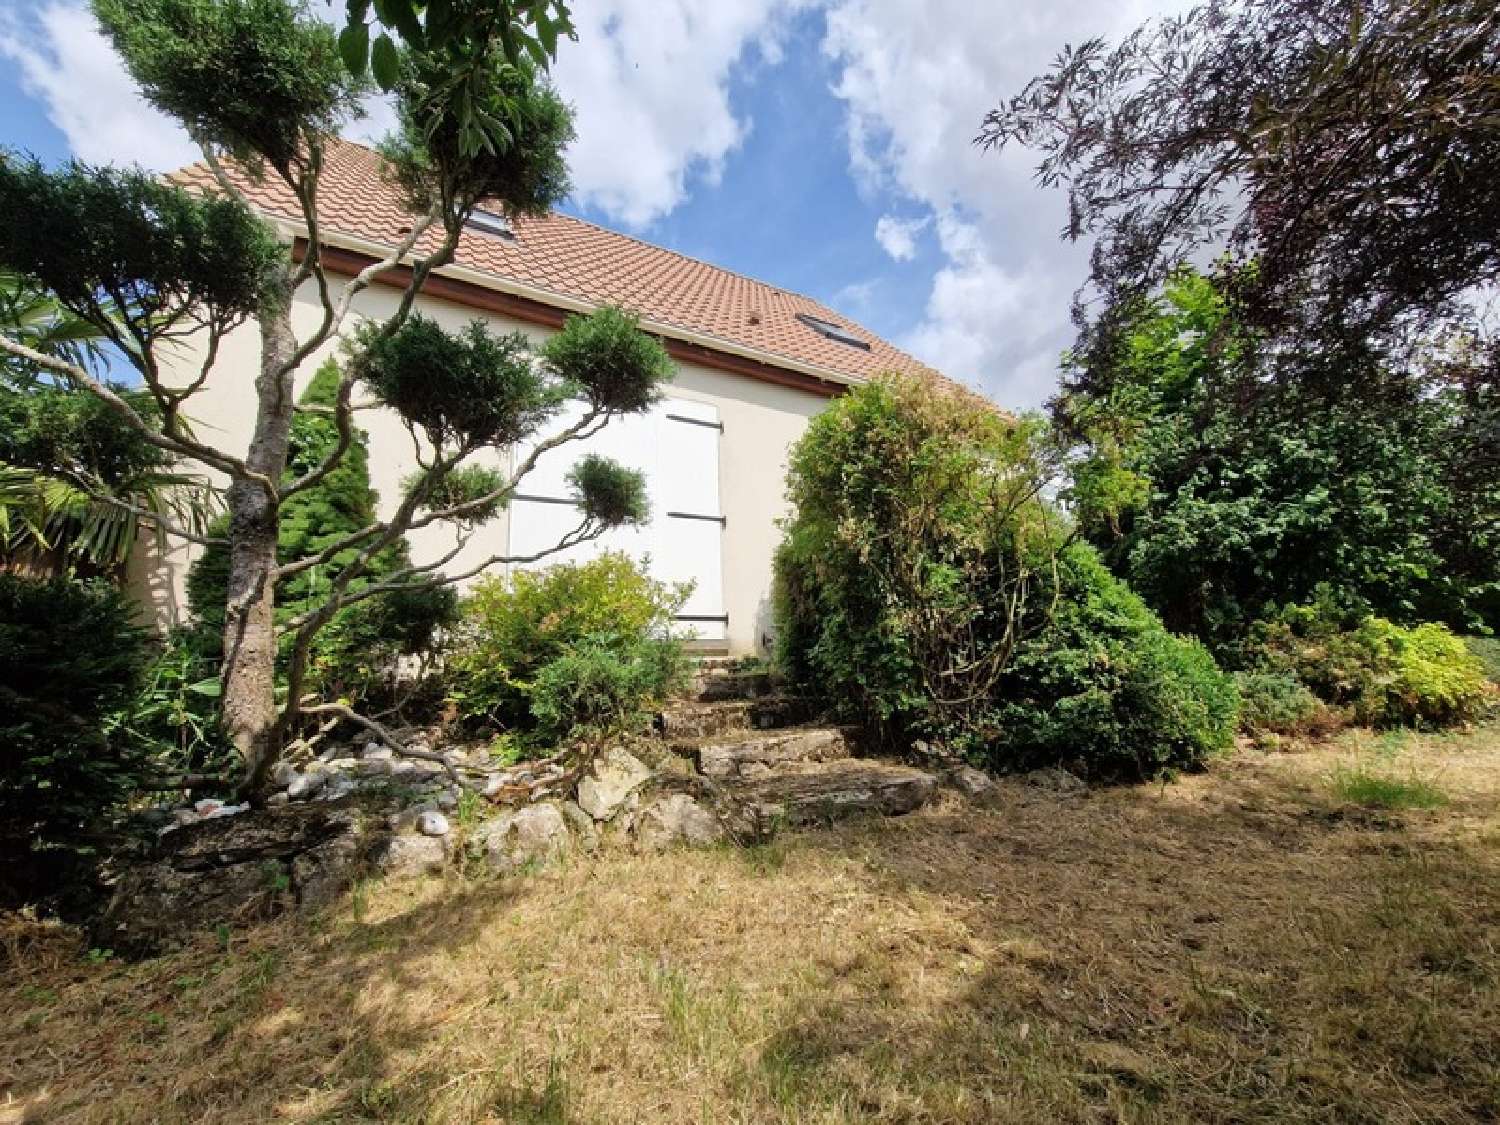  for sale house Ouarville Eure-et-Loir 2